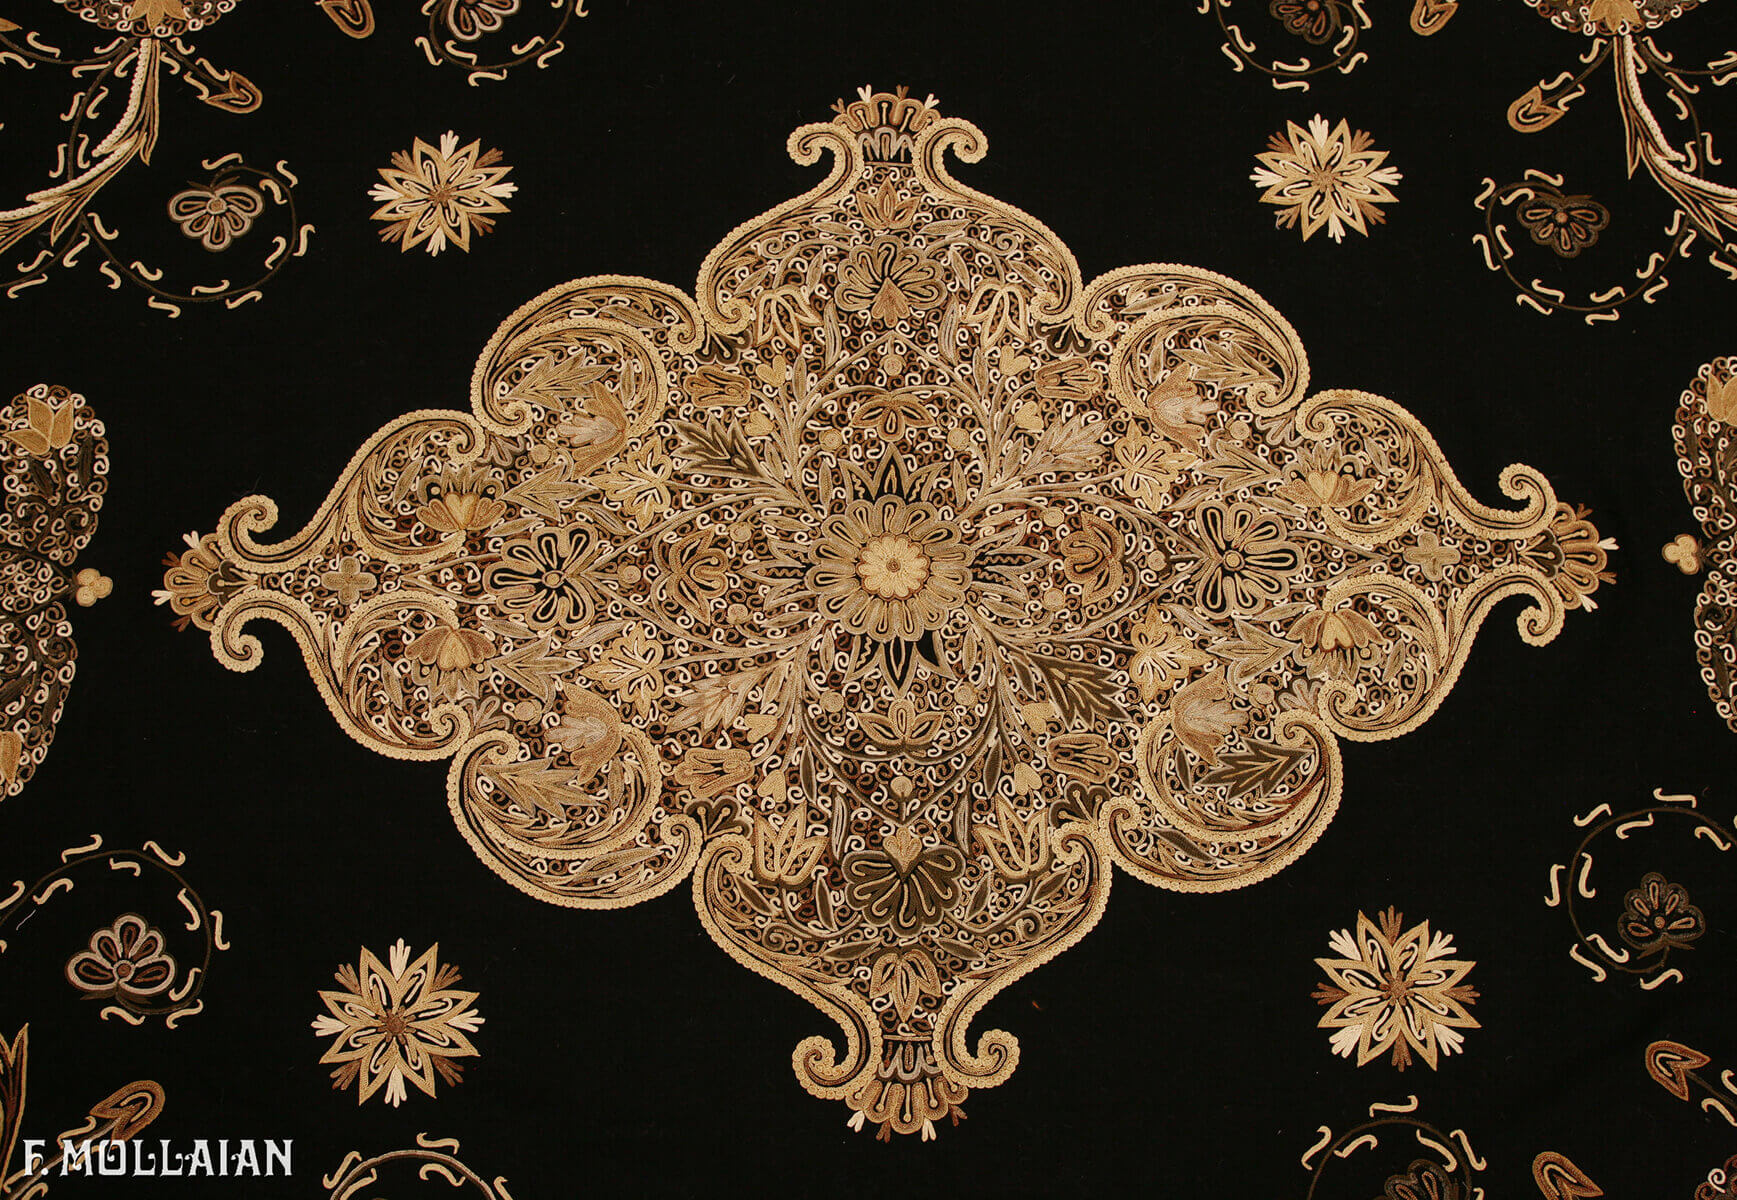 Textil Persischer Antiker Rashti-Duzi n°:13644414